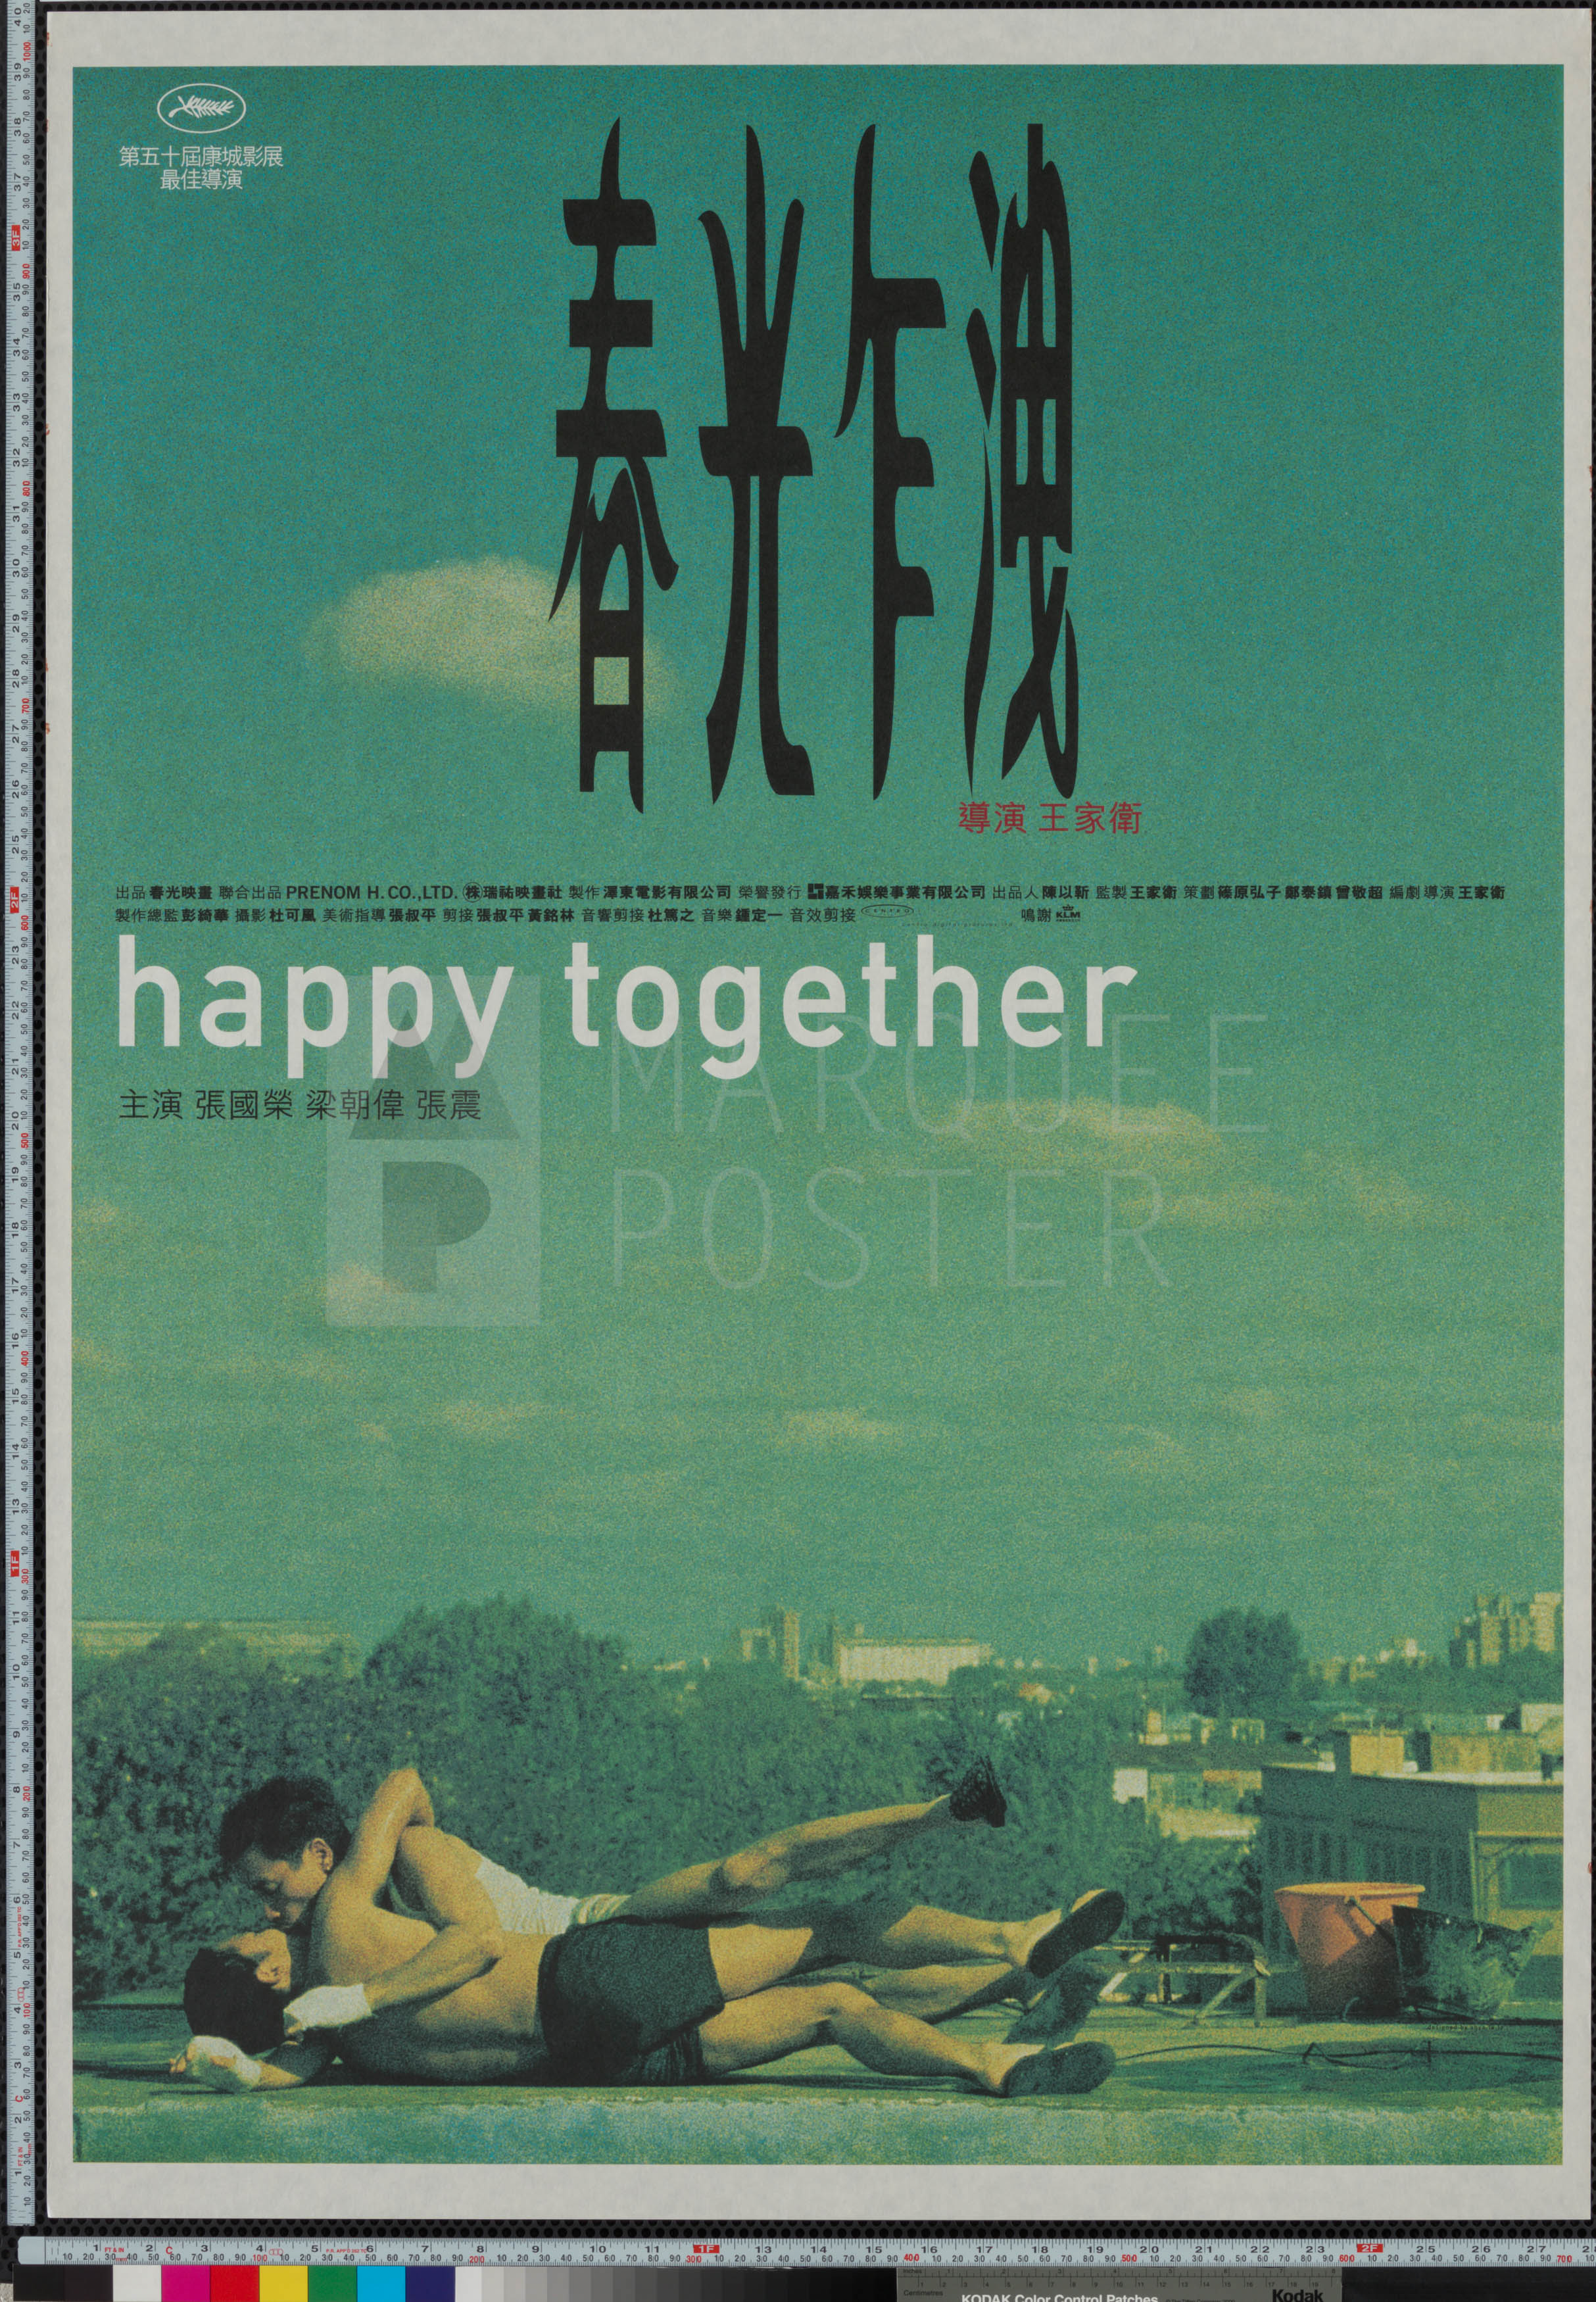 47-happy-together-kissing-style-hong-kong-b1-1997-02